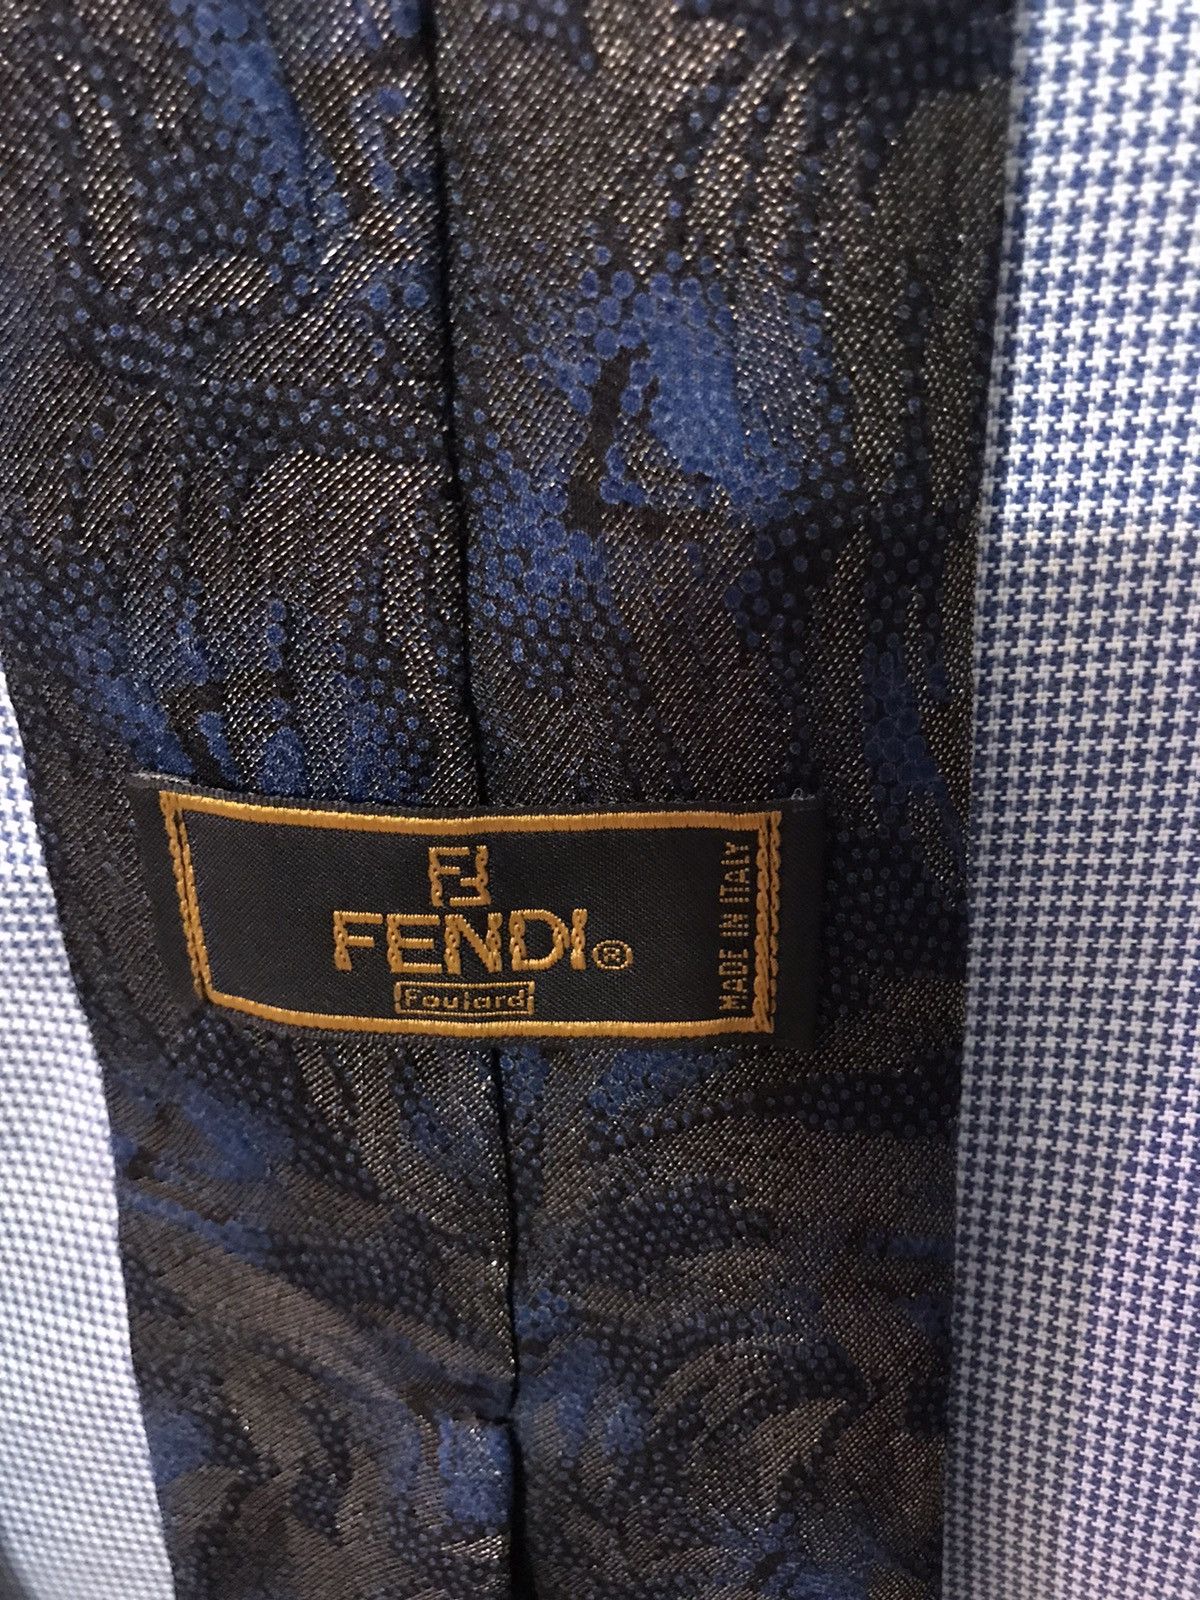 Fendi Floral shimmer silk tie (Royal,Grey, Black) Size ONE SIZE - 5 Thumbnail